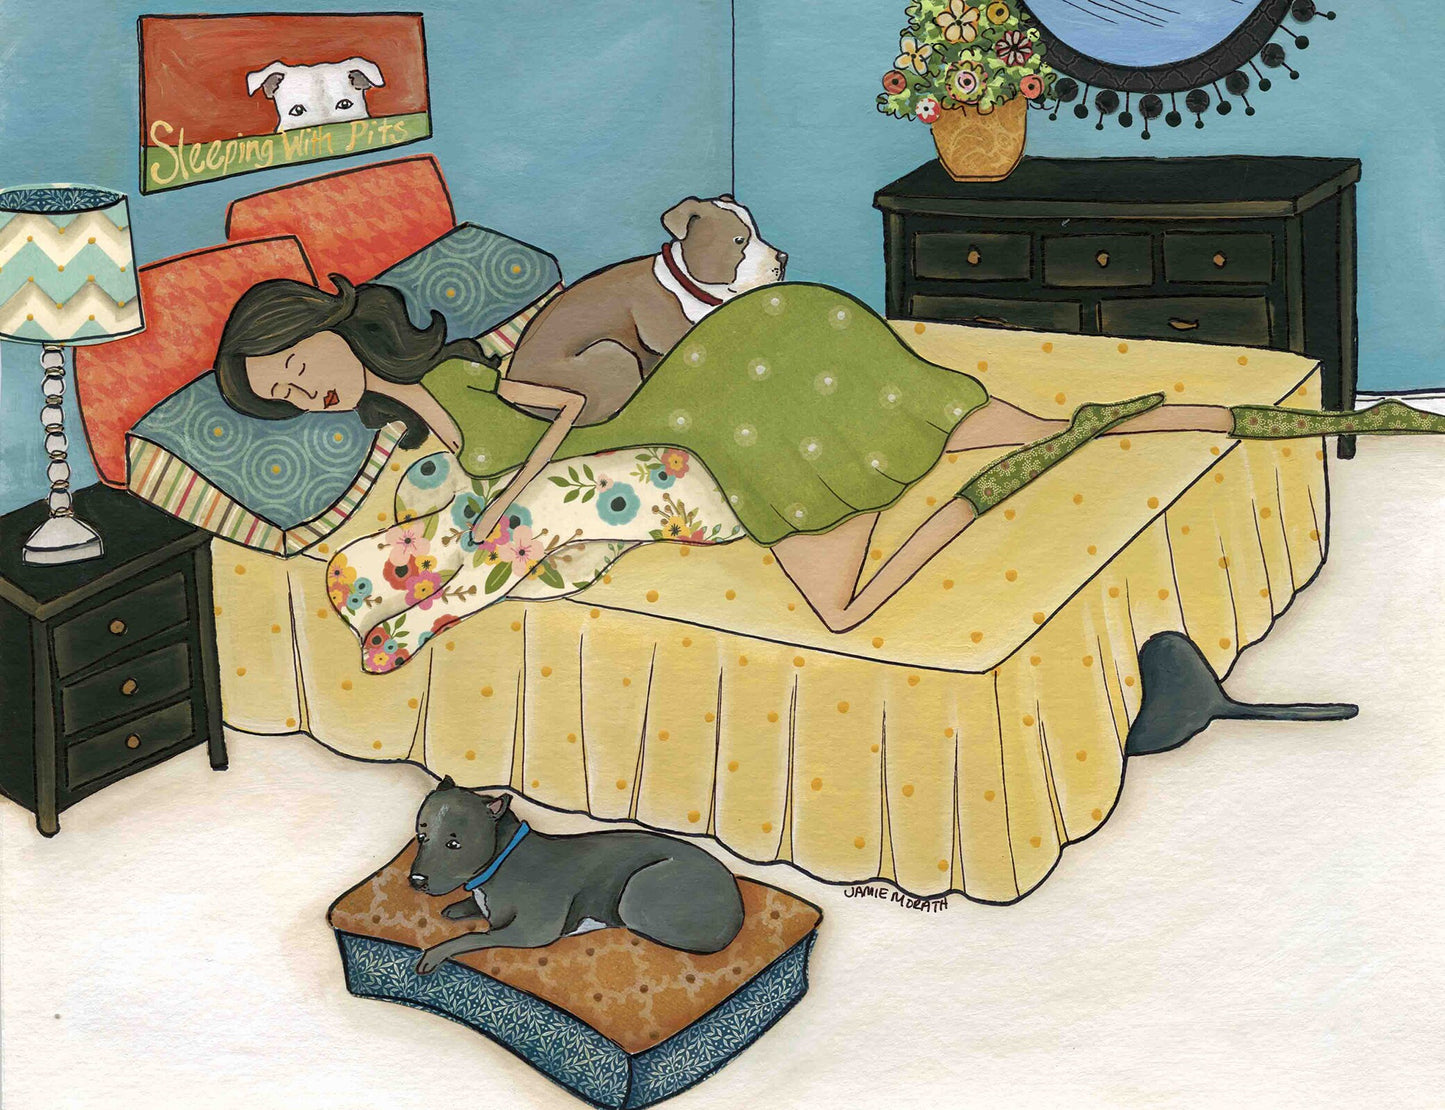 Sleeping With Pits, dog art print